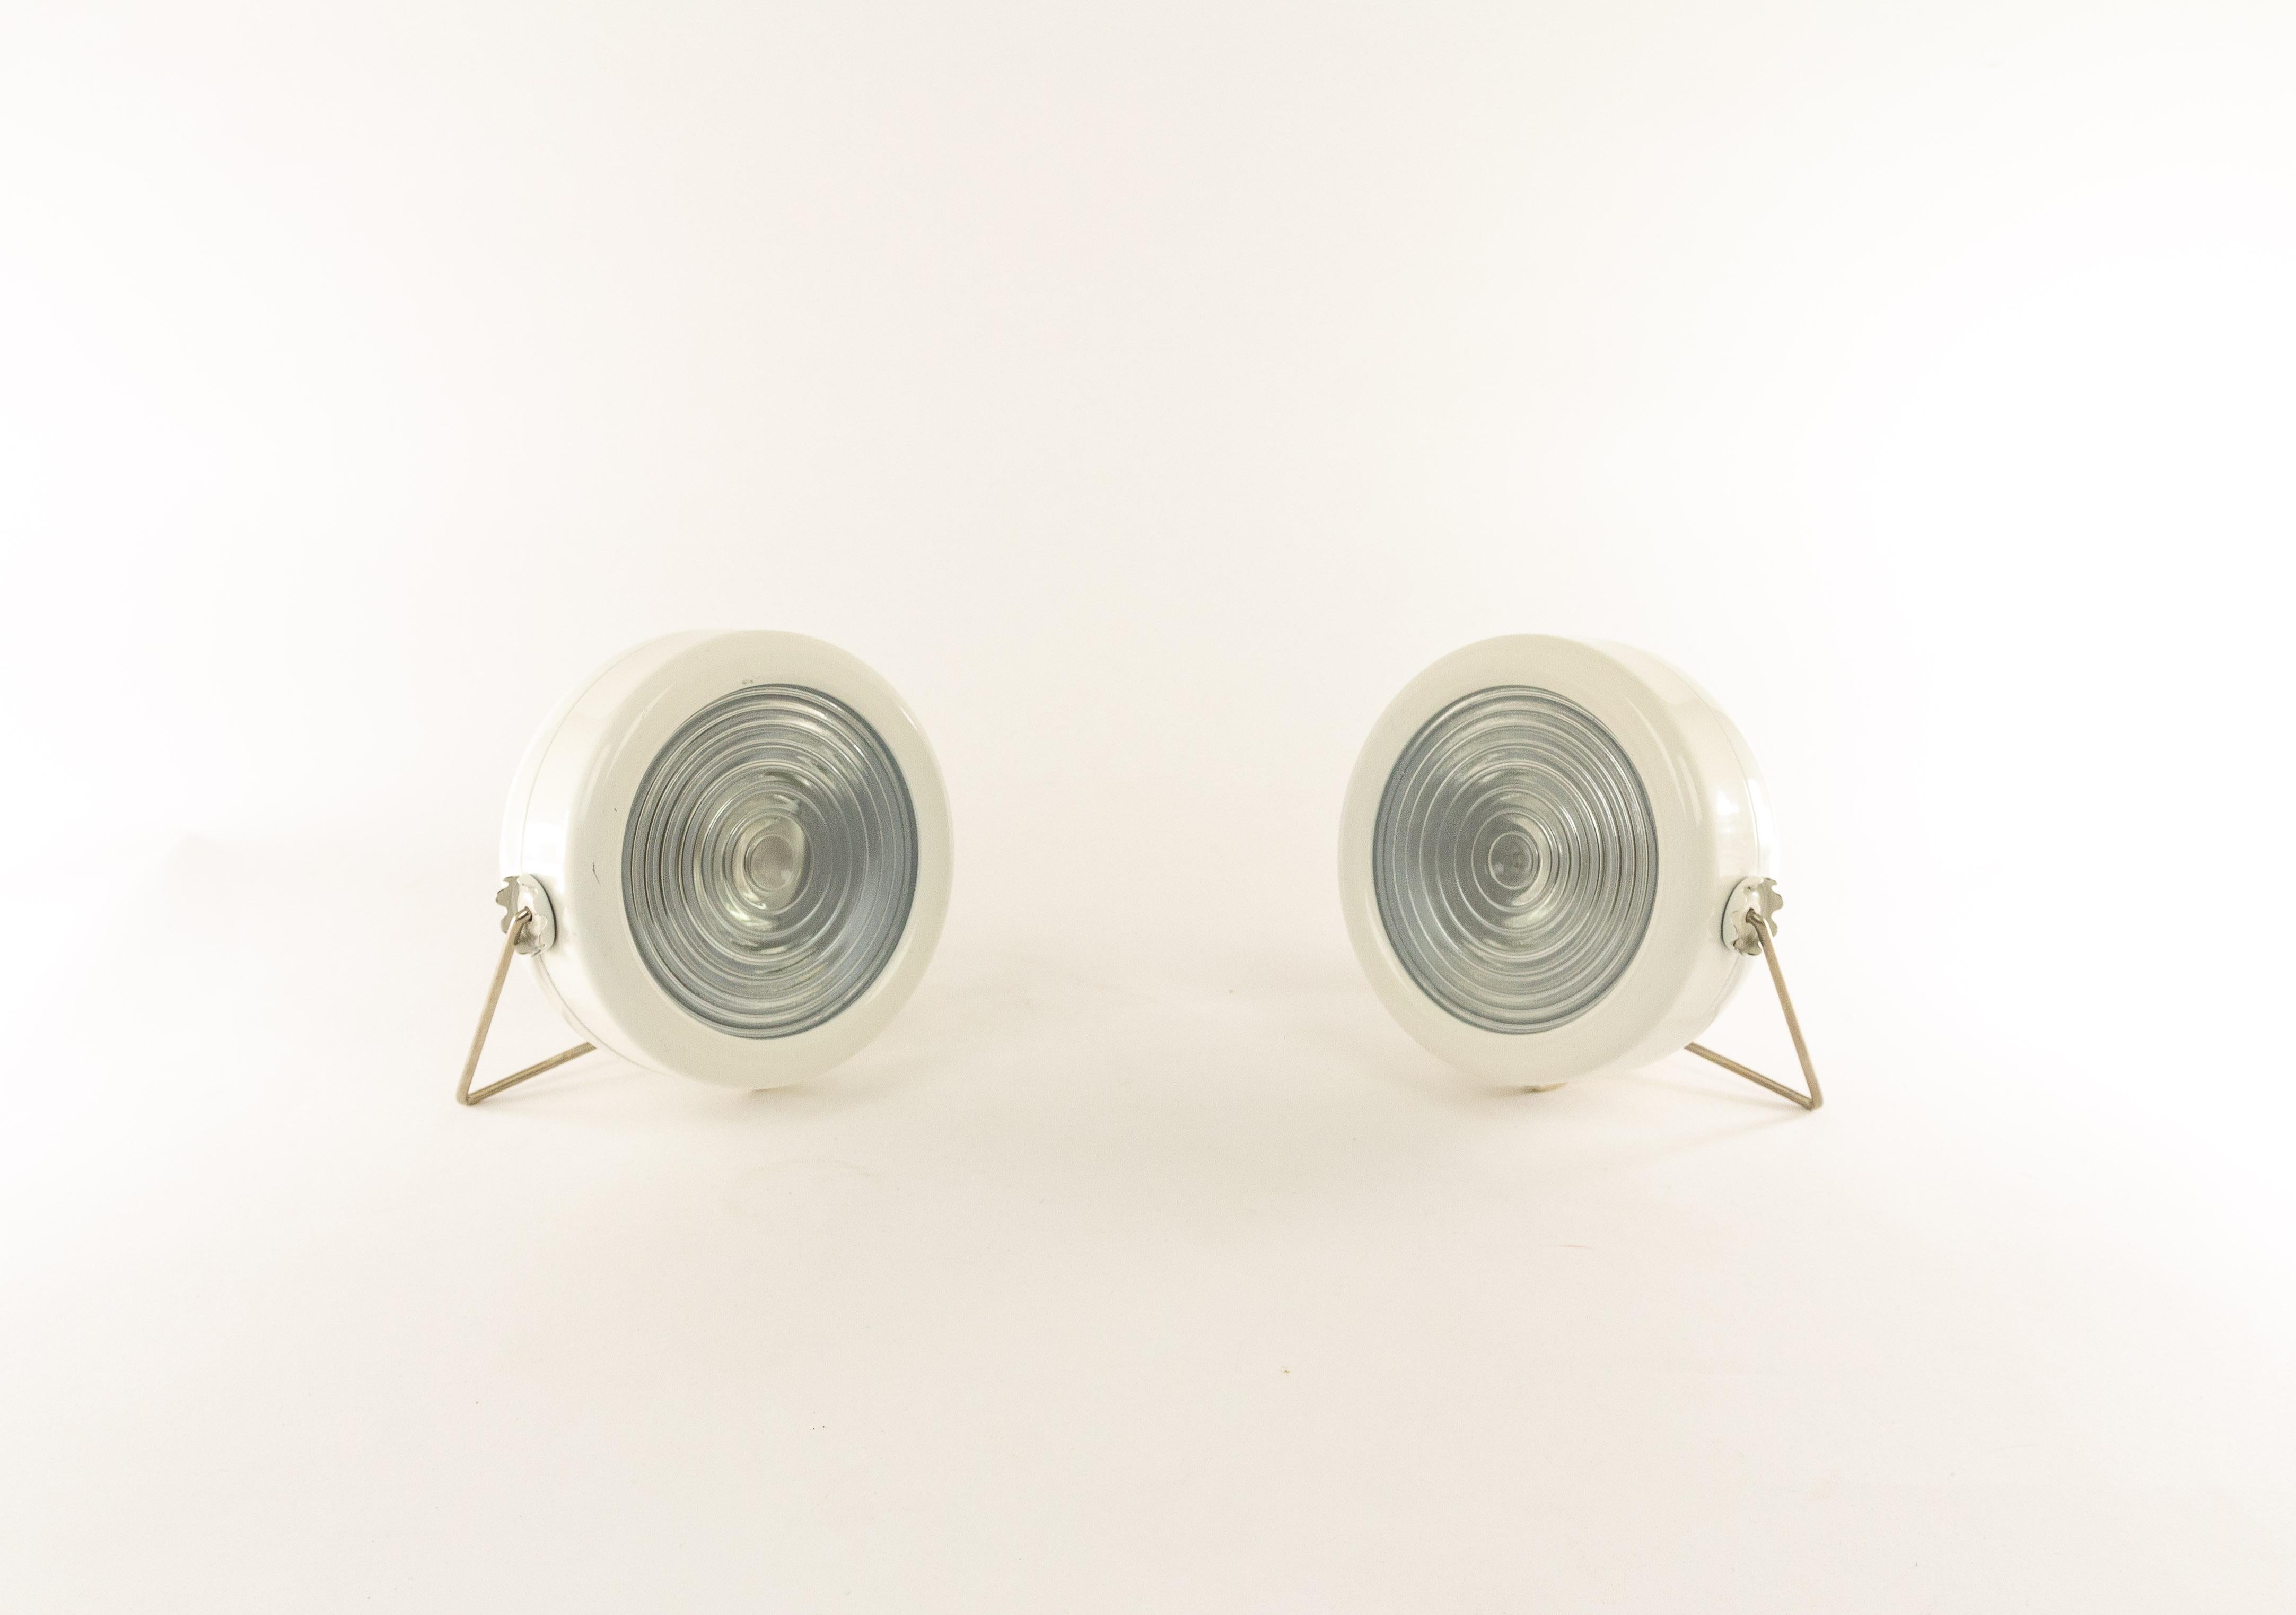 Italian Pair of Sciuko Table Lamps by Achille & Pier Giacomo Castiglioni for Flos, 1966 For Sale